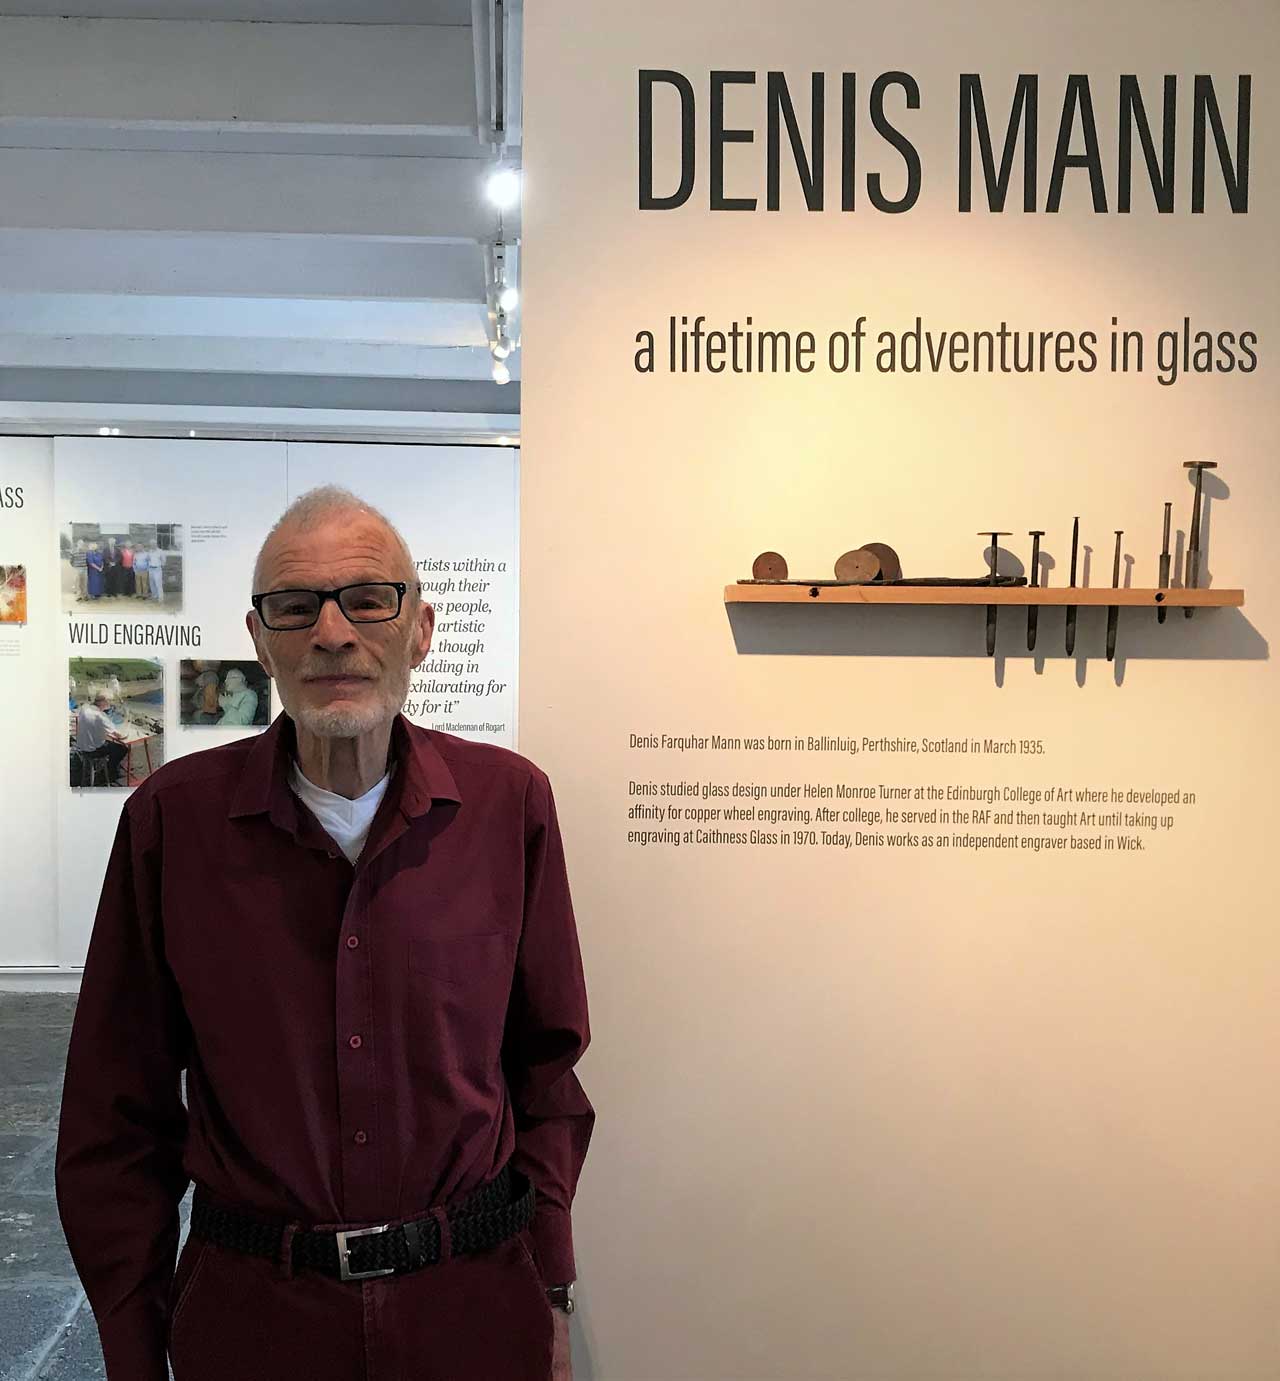 Photo: Dennis Mann at the Exhibition